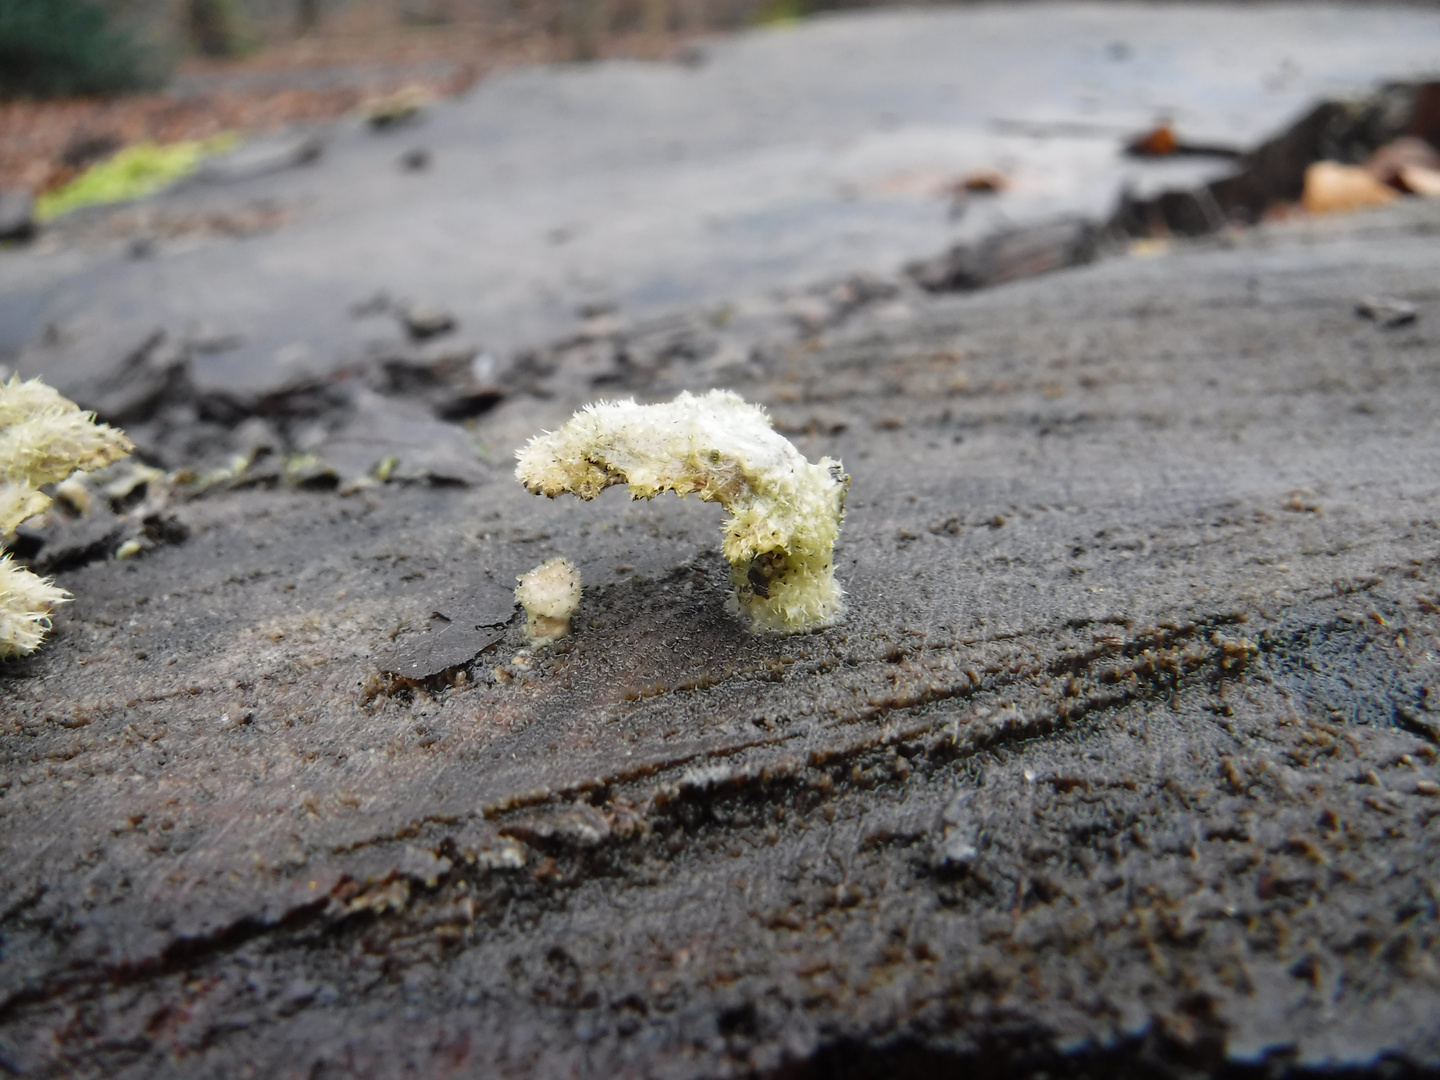 DSCF3506 - Tiny tree moss